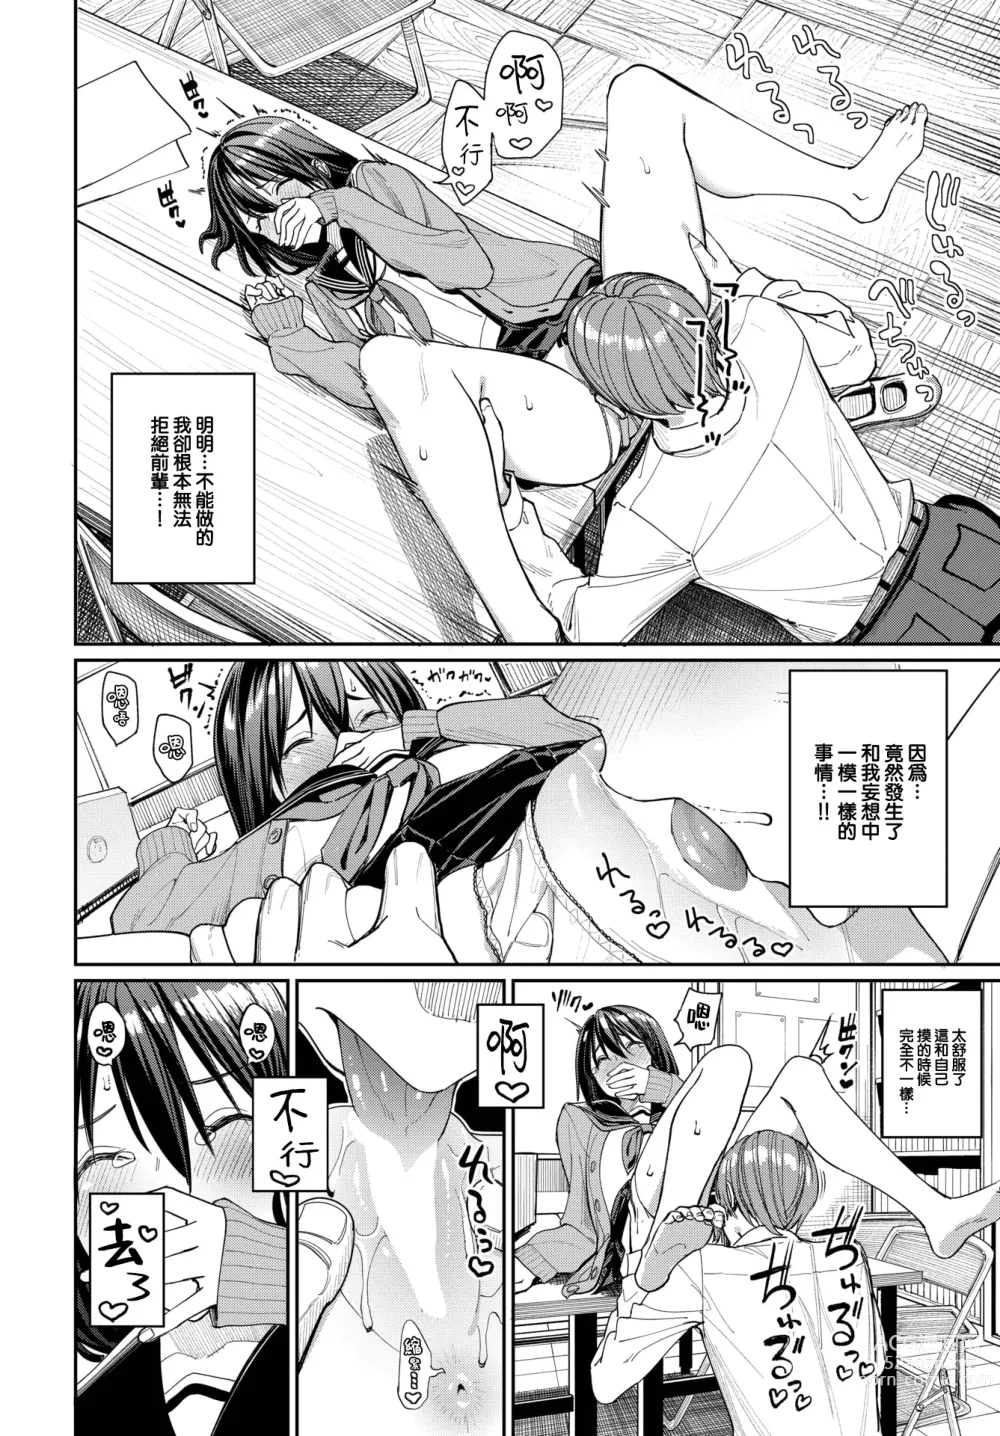 Page 10 of manga Riko no Hatsujou Chuuihou! - Im in heat so much. I can't take it...